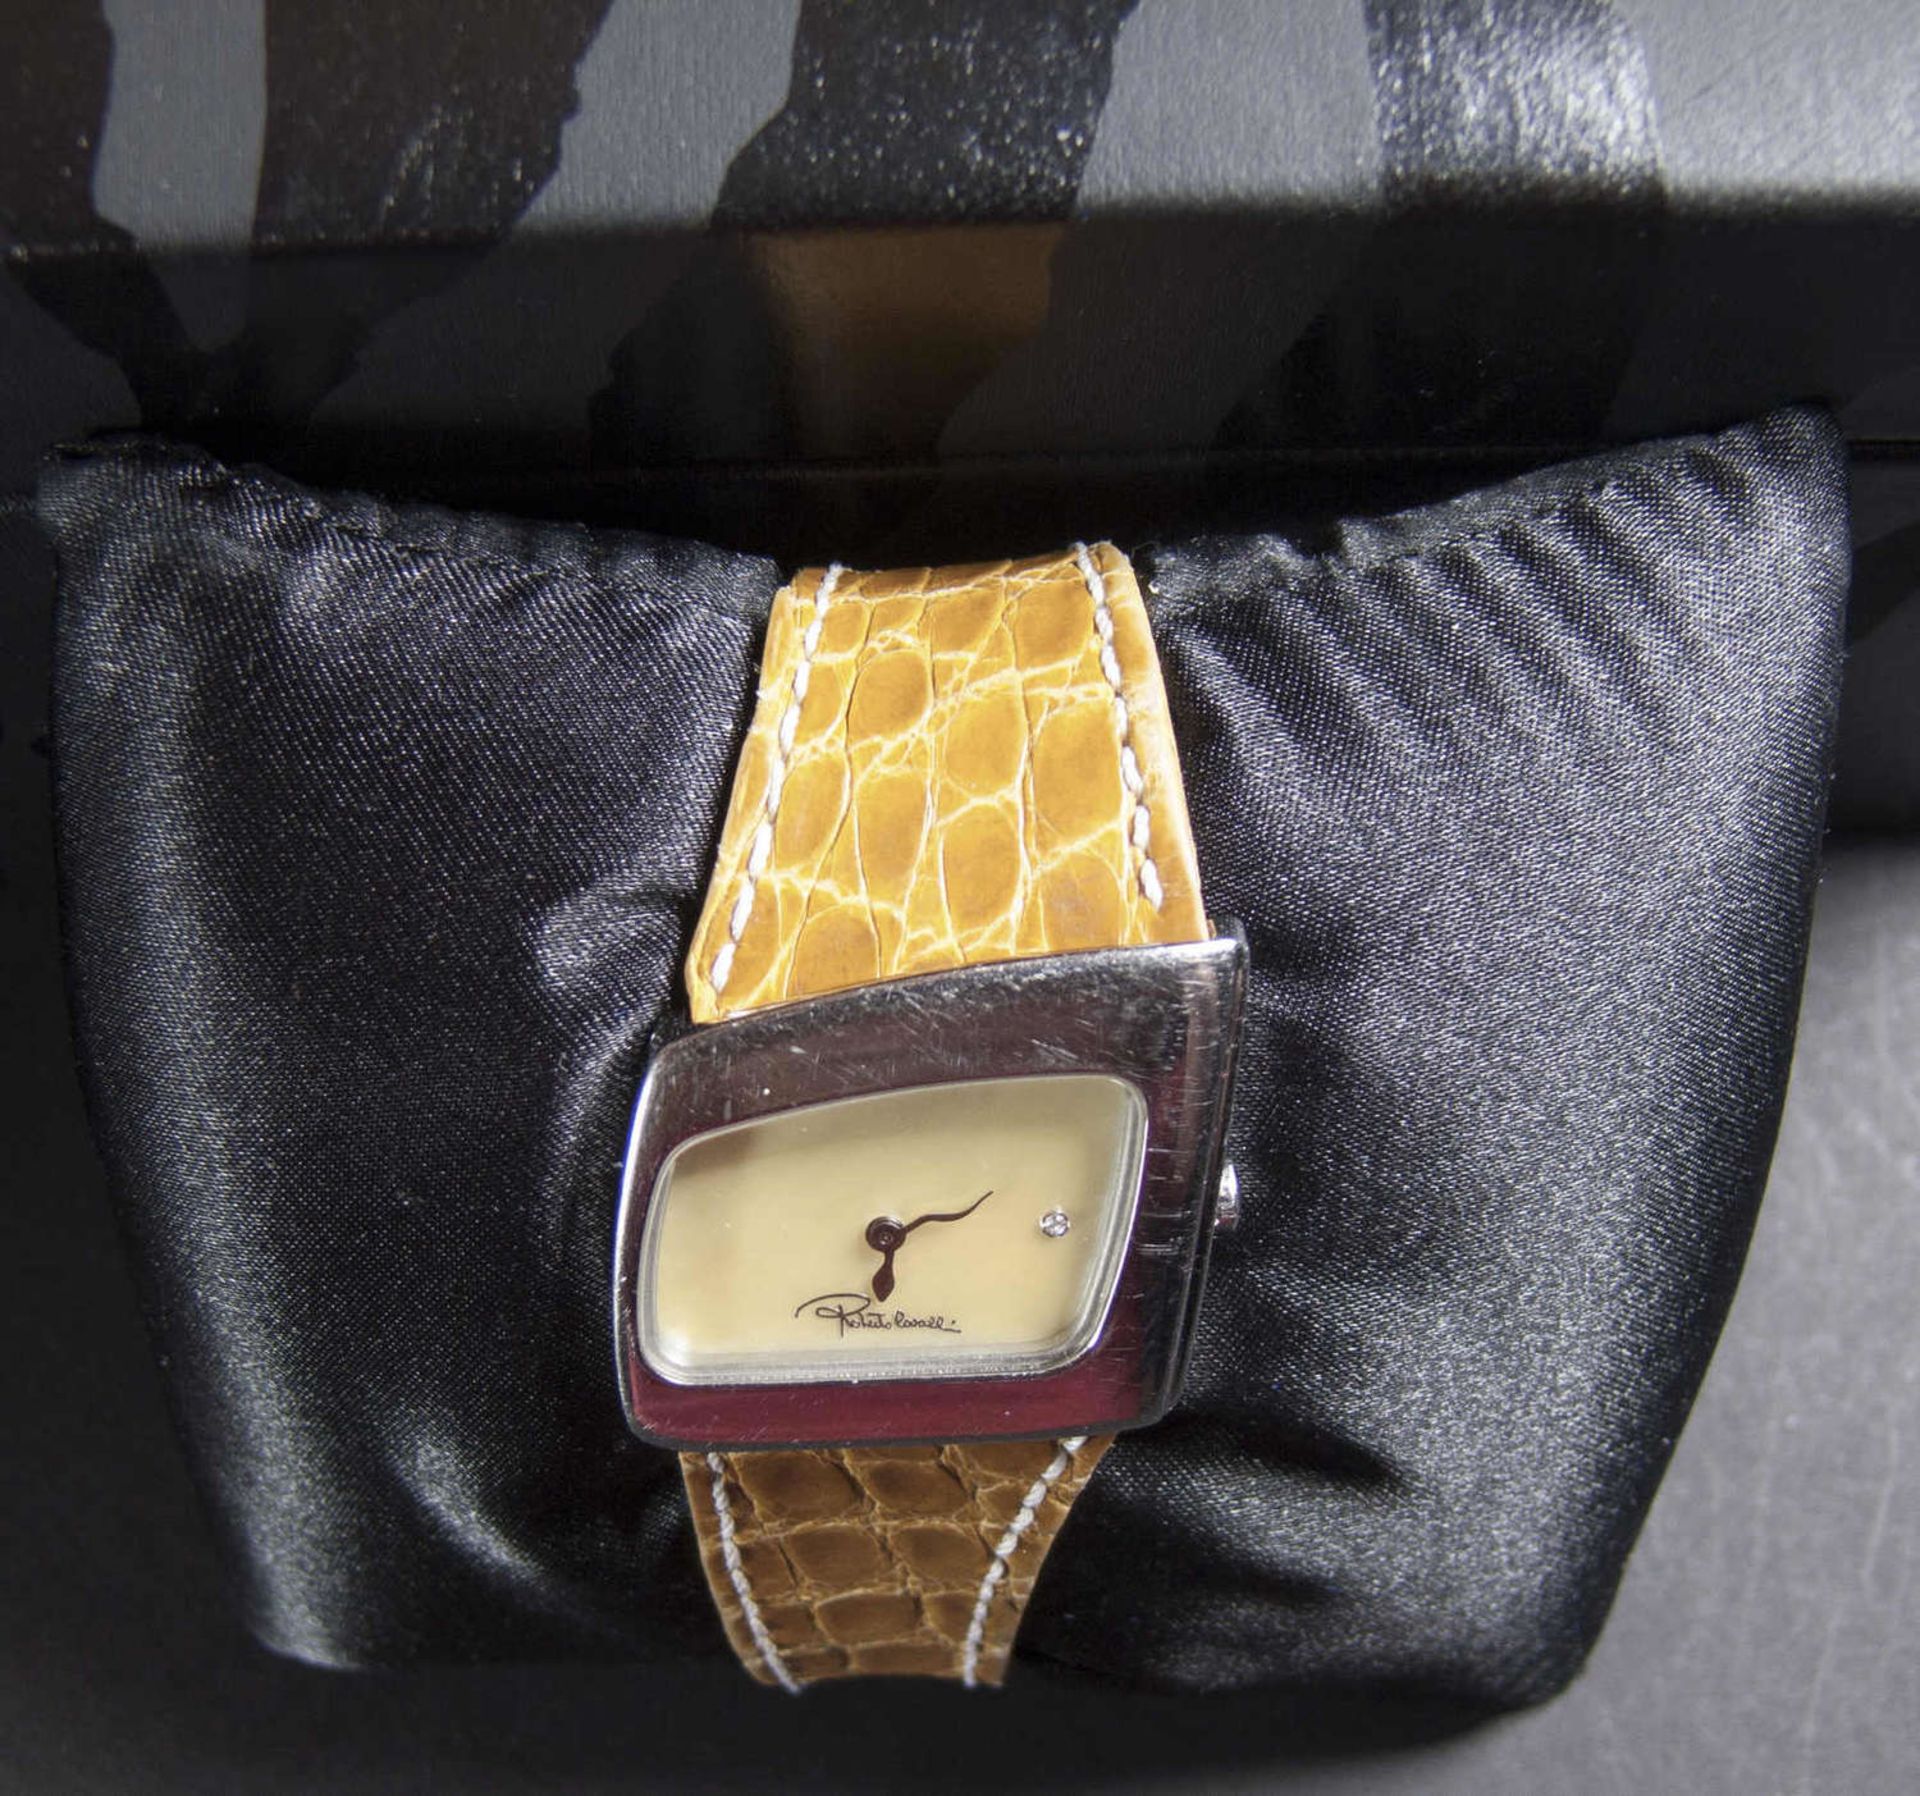 Damen - Armbanduhr "Roberto Cavalli". Kroko - Leder - Armband, In orig. Schatulle.Ladies' wristwatch